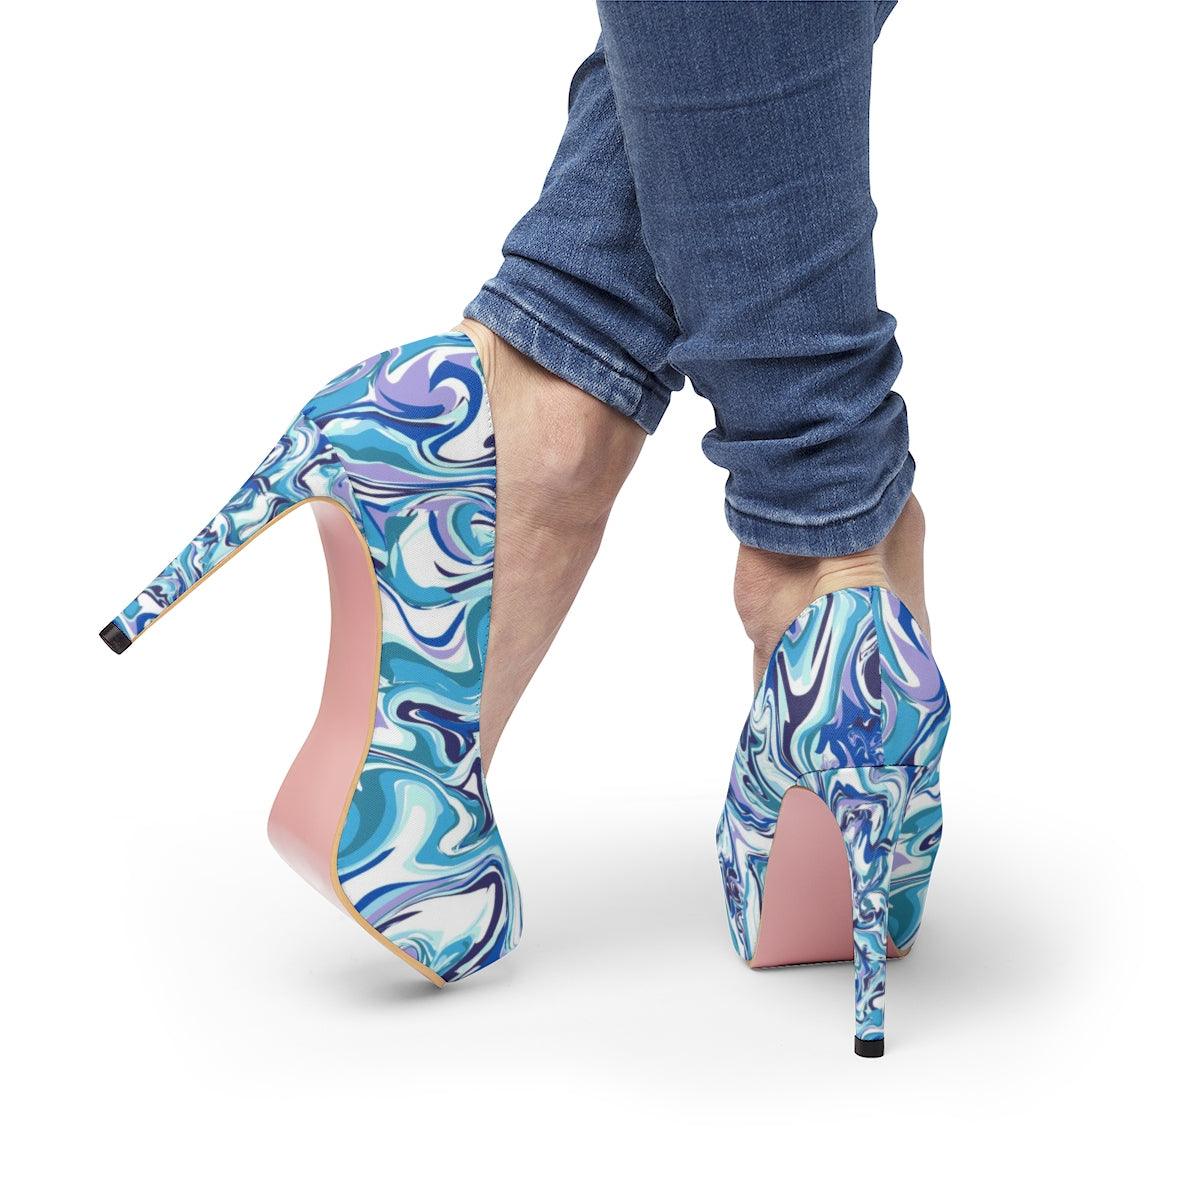 Blue Marble Women's Platform Heels - Buyashoes